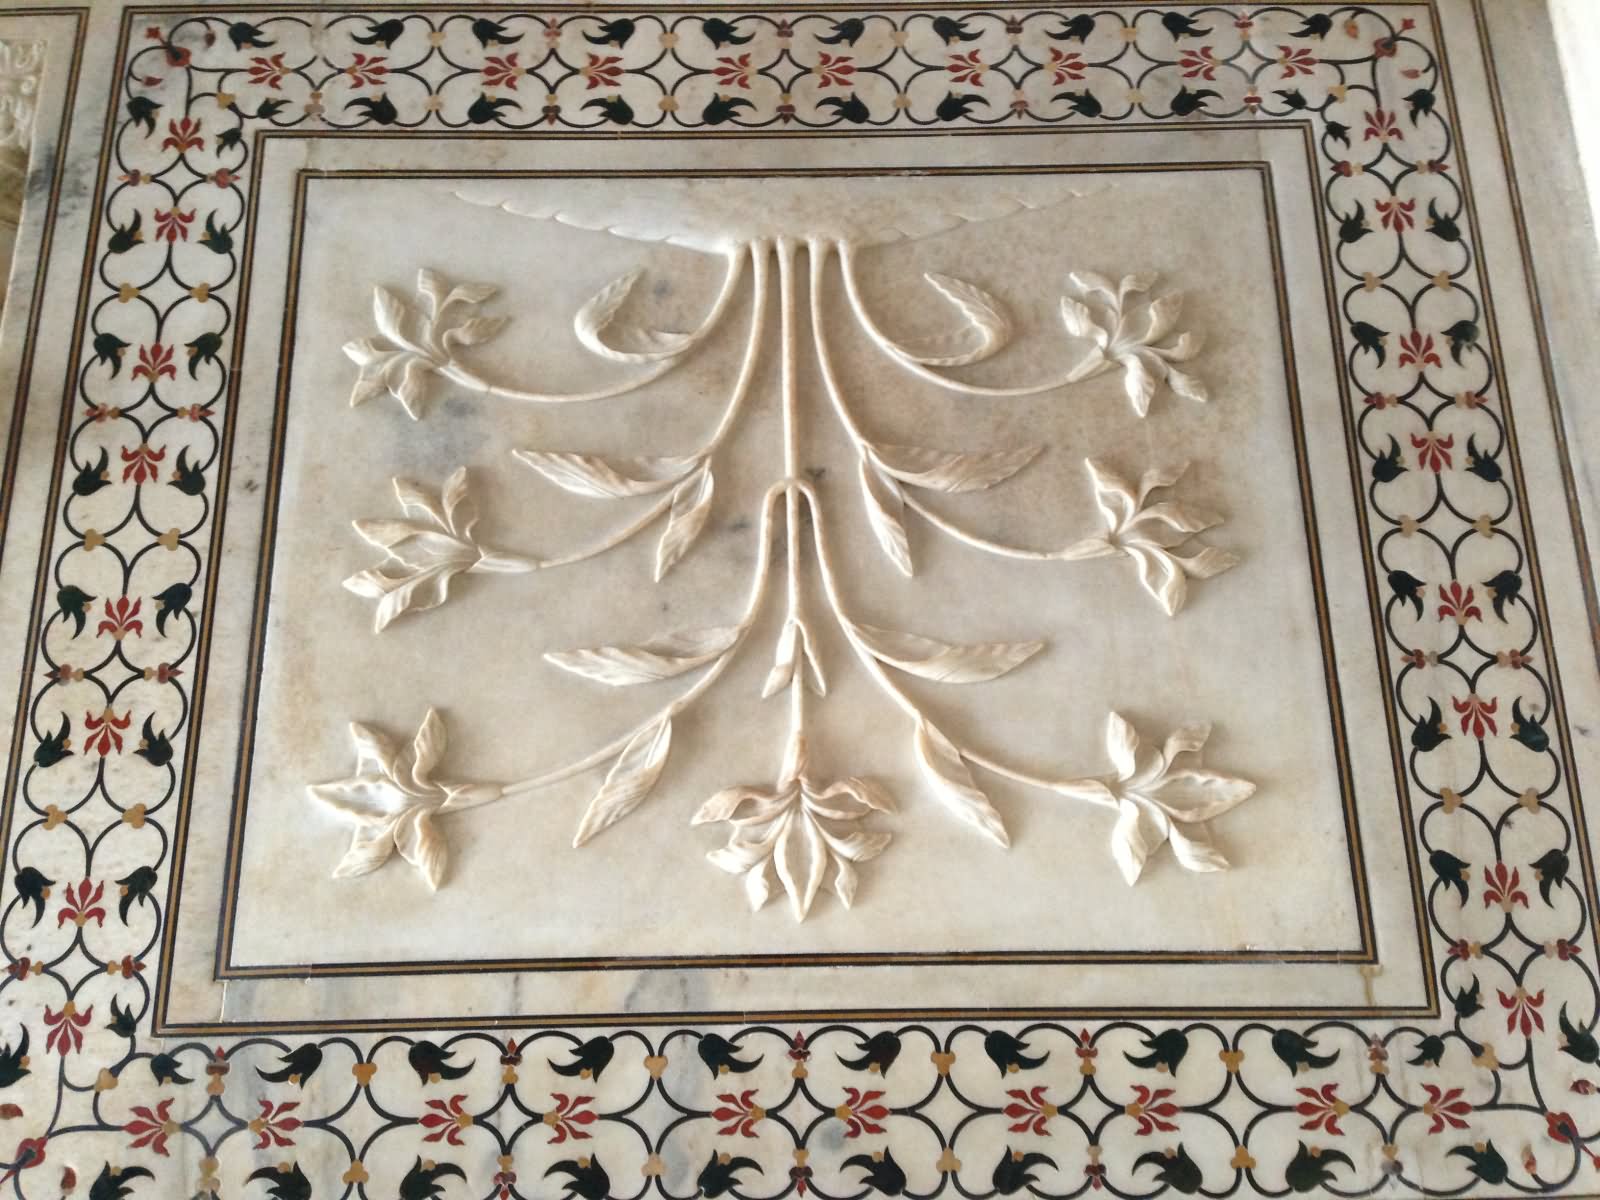 Art Work Inside Taj Mahal